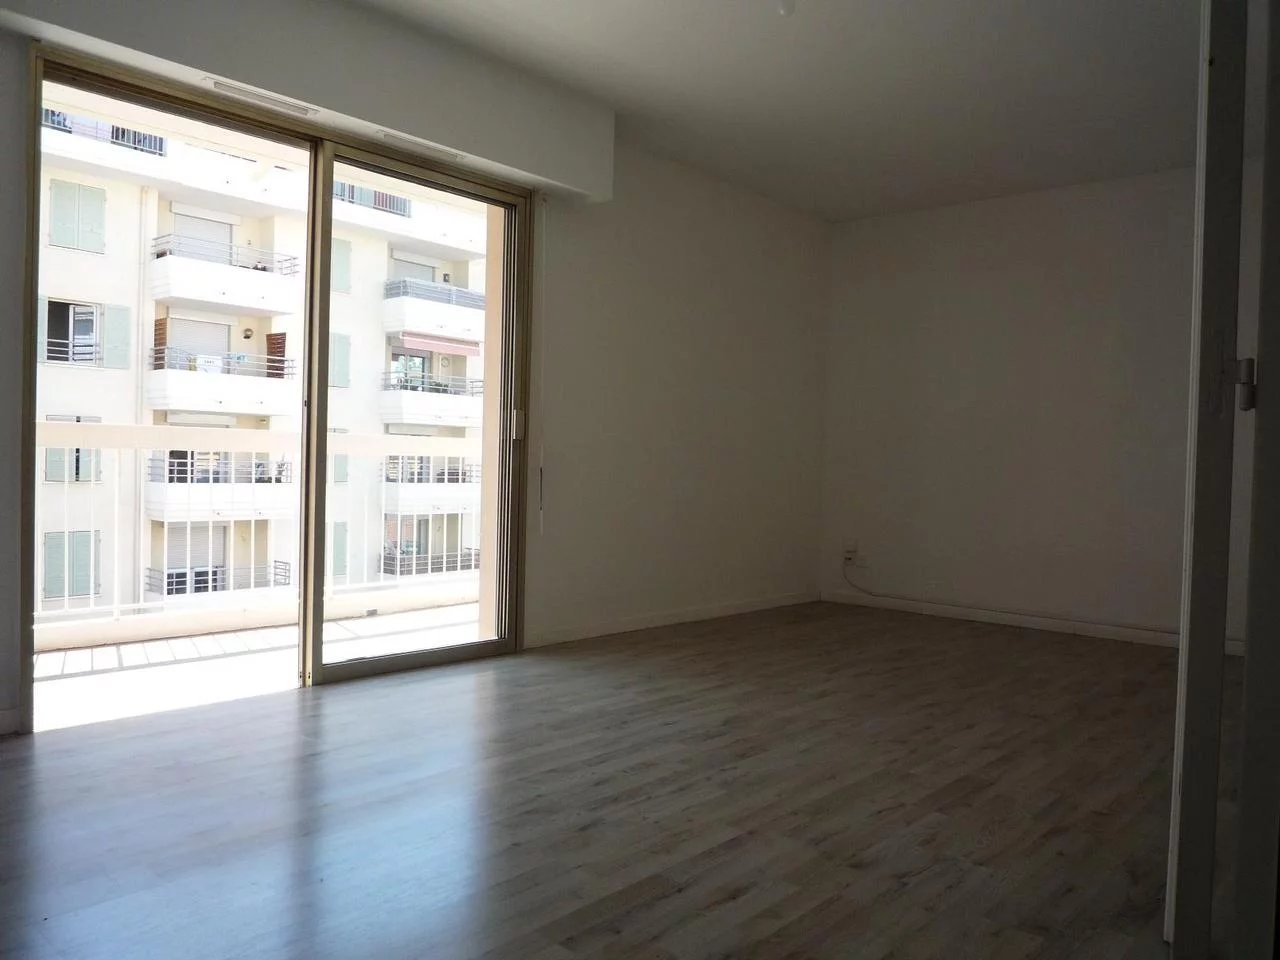 Appartement  2 Locali 54.55m2  In vendita   260 000 €